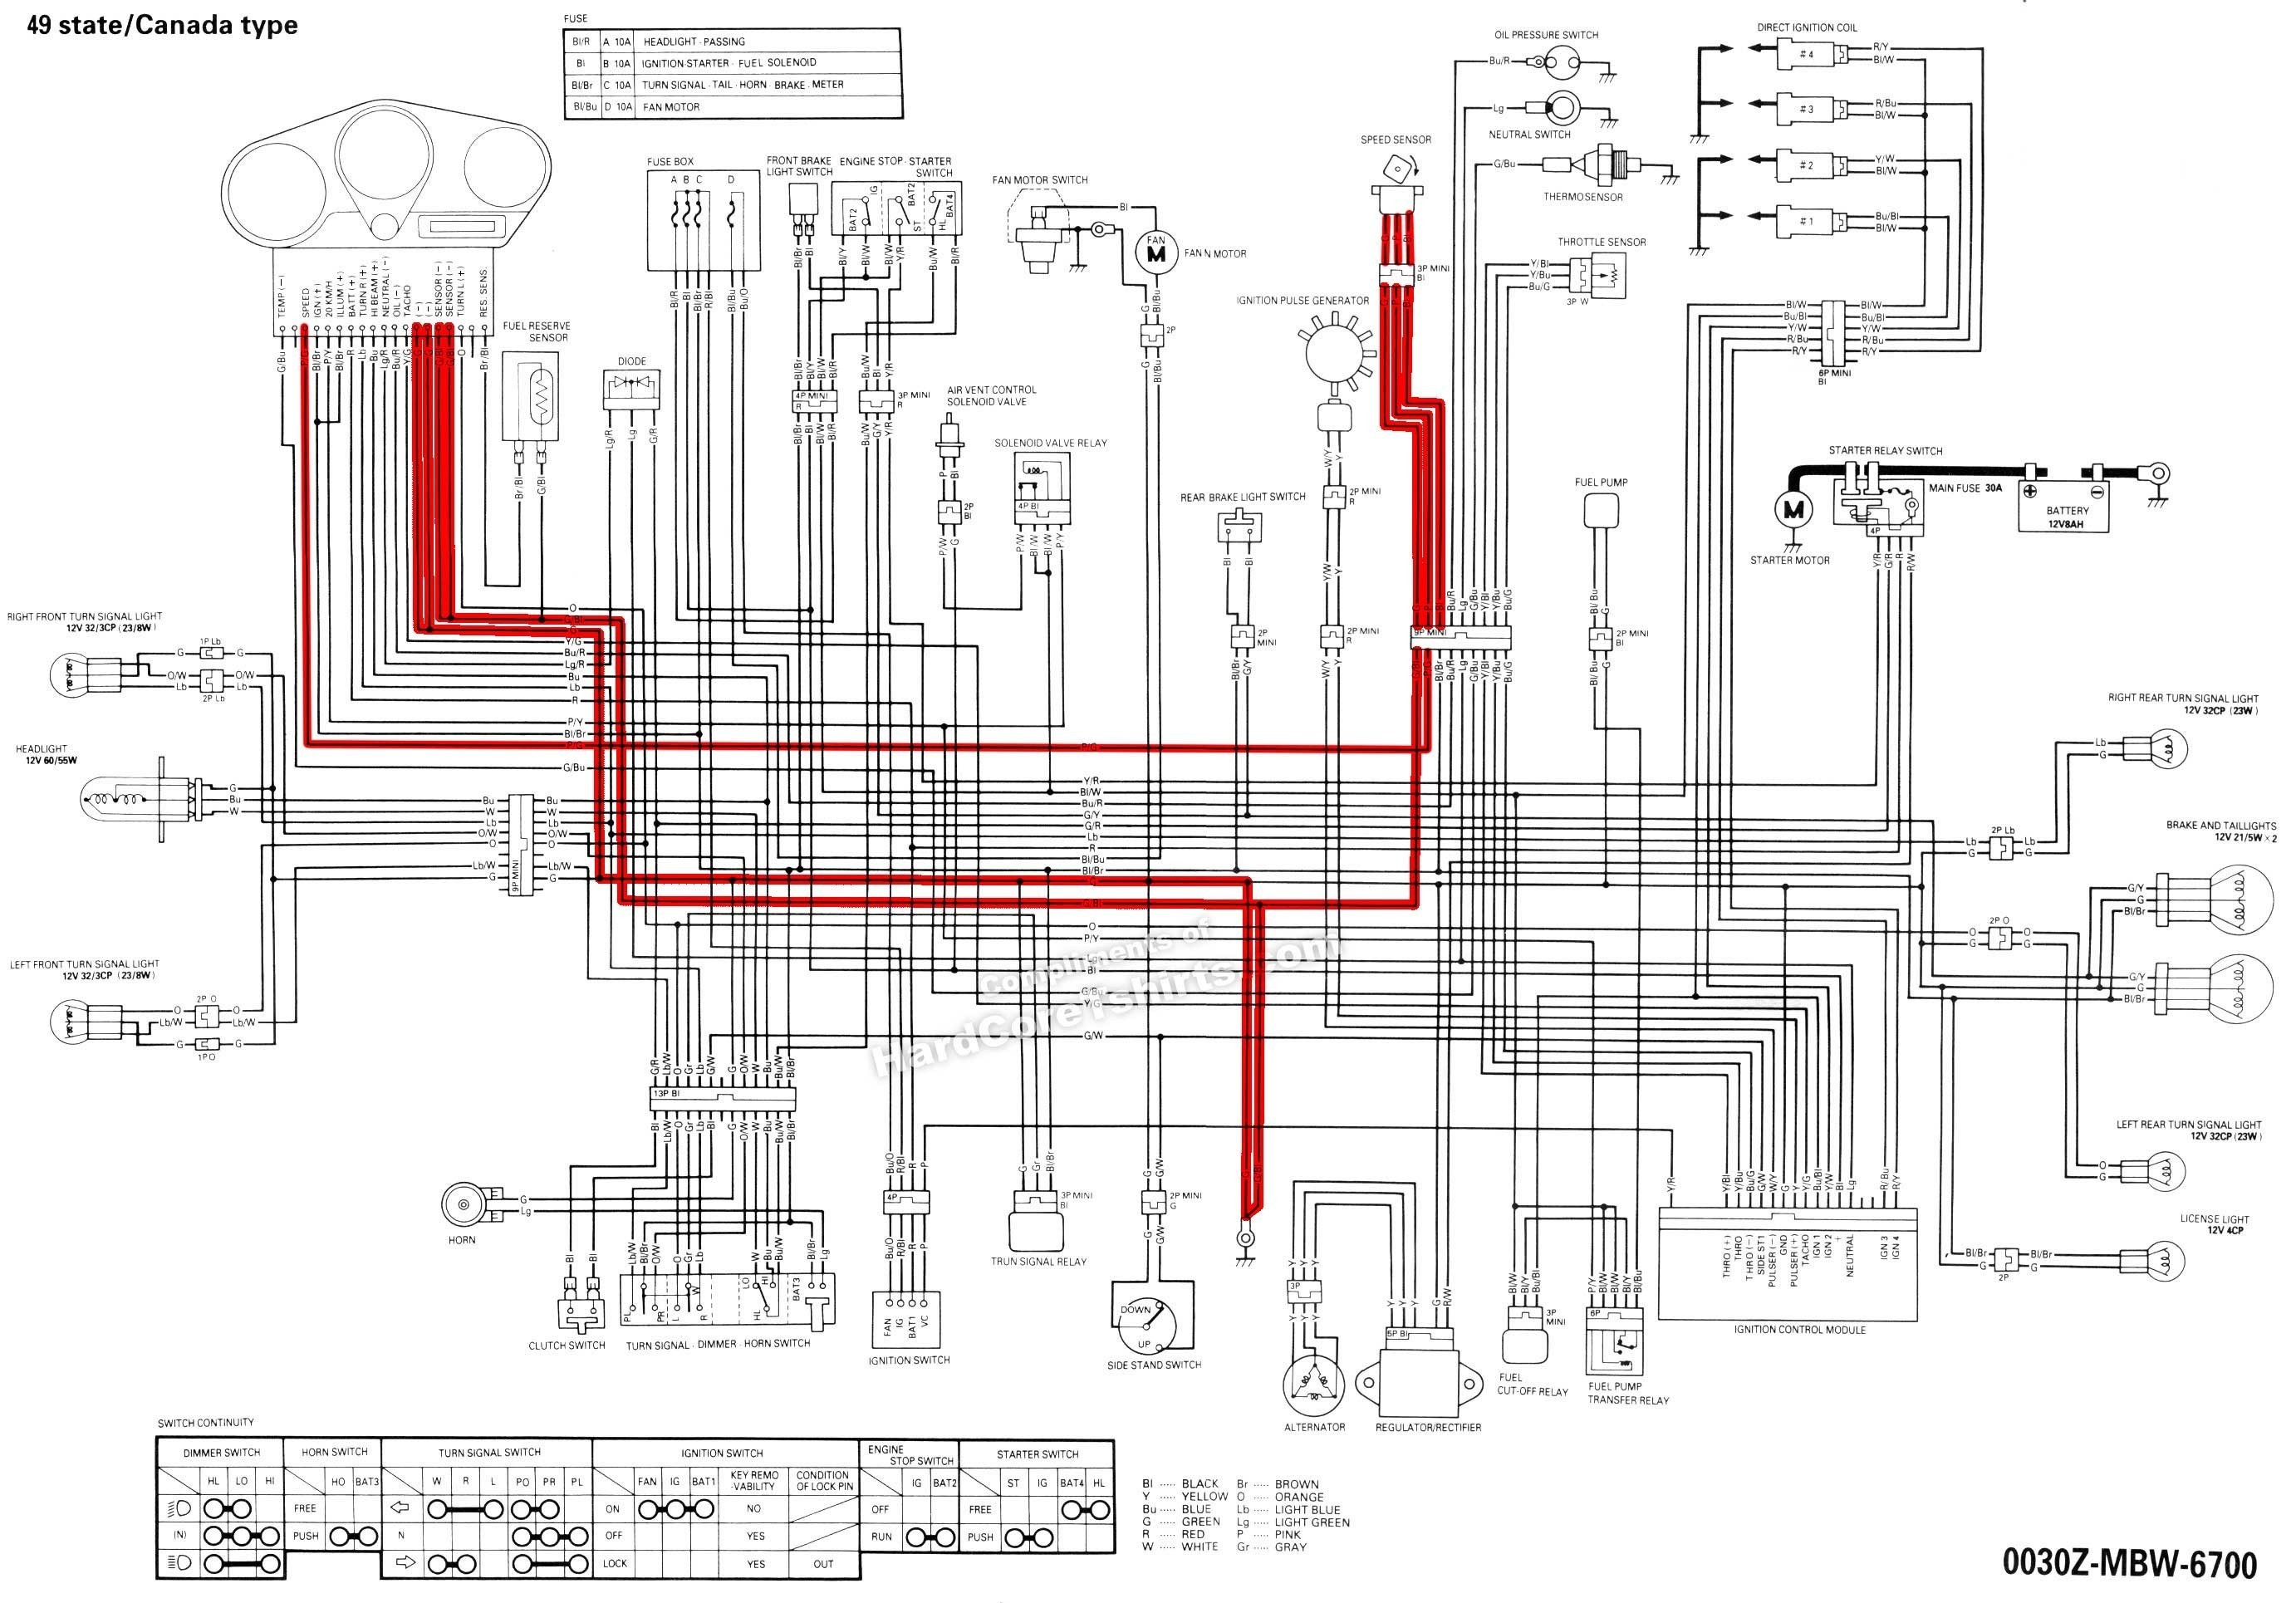 Honda atv Parts Diagram 04 Honda 250 Ignition Wiring Wiring Diagram Datasource Of Honda atv Parts Diagram